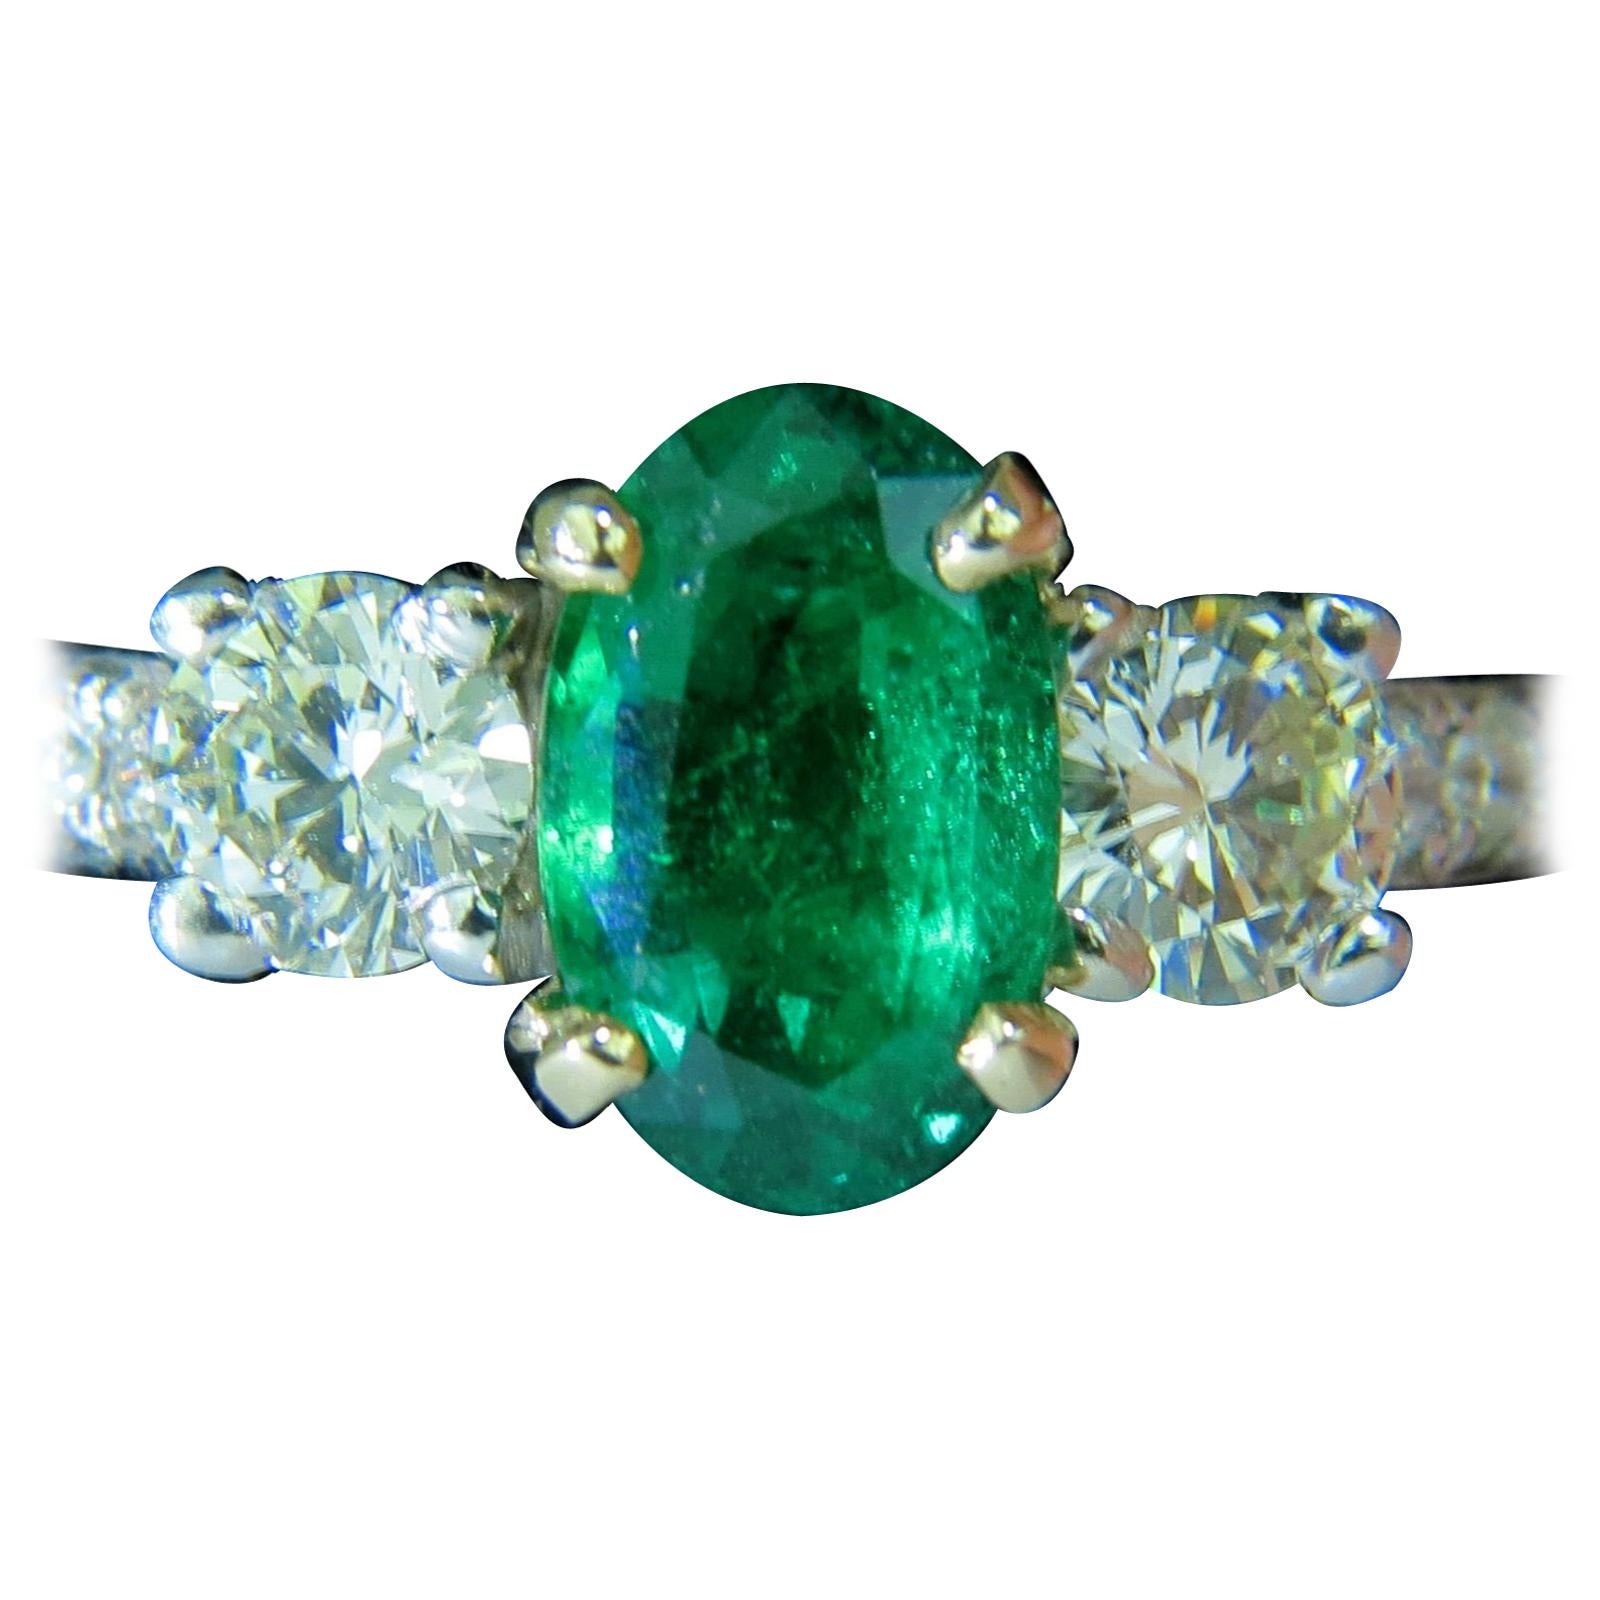 3.05 Carat Natural Emerald Diamond Ring Zambia A+